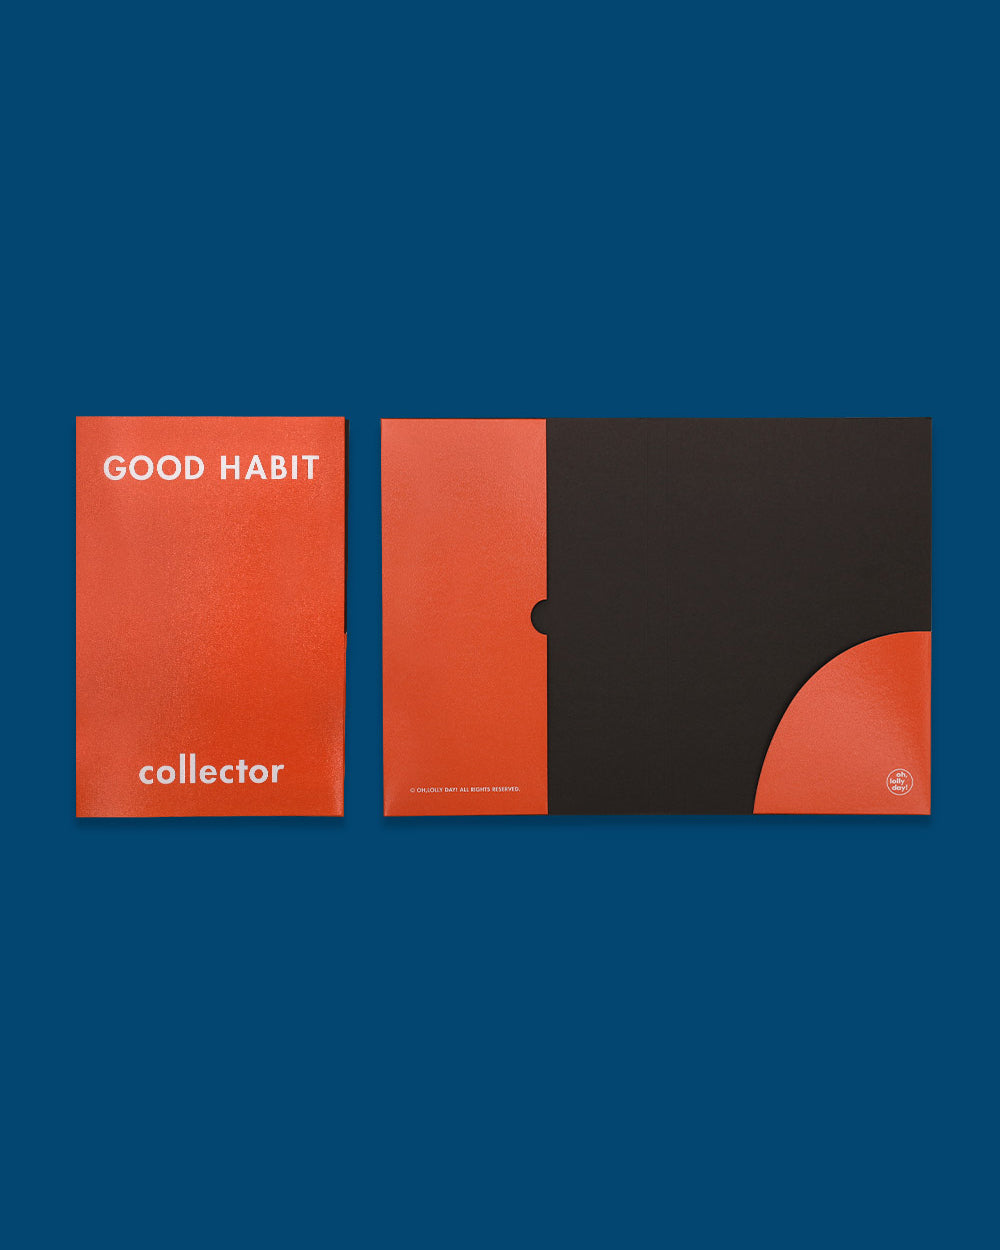 [File] Good habit collector_mini